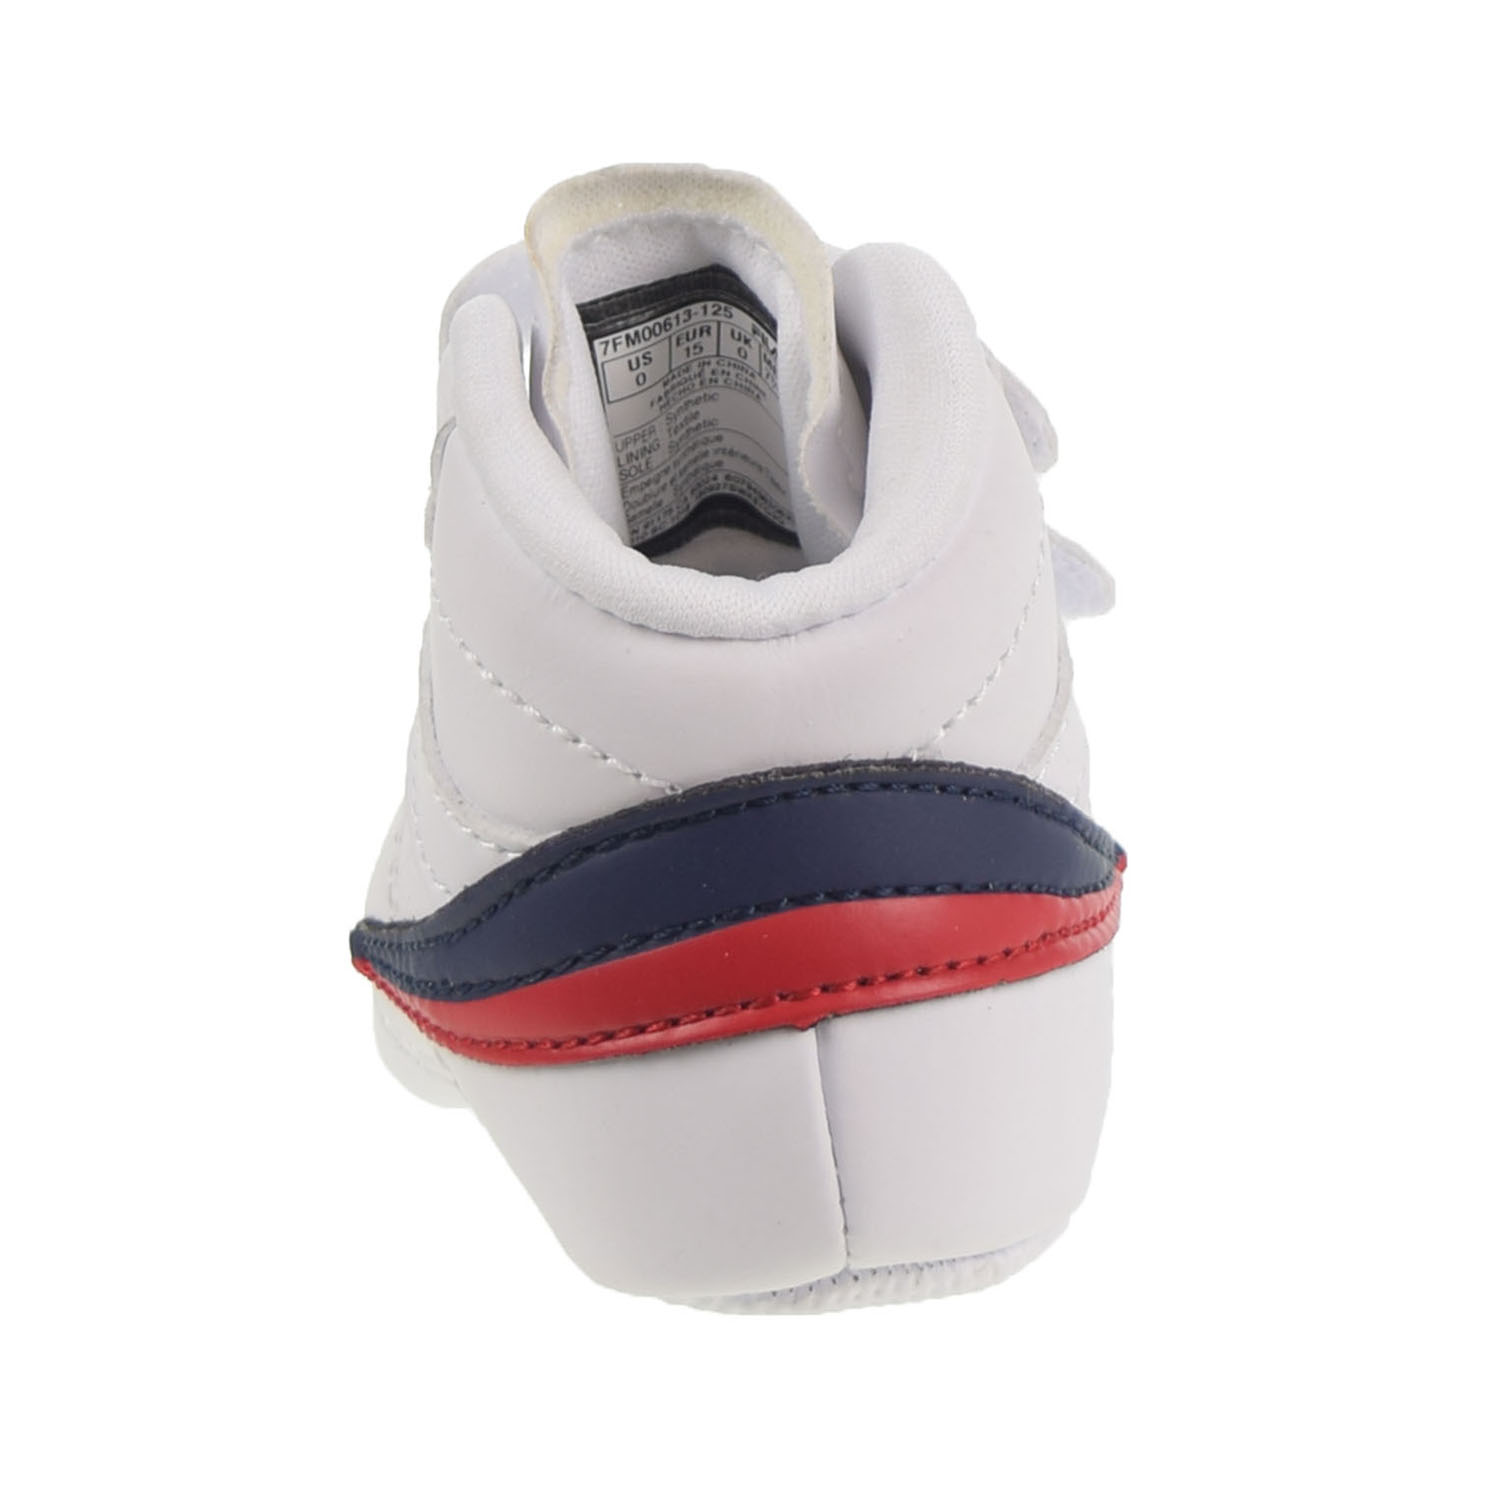 Fila Crib F-13 Kids' Shoes White/Navy/Red 7fm00613-125 - image 3 of 6